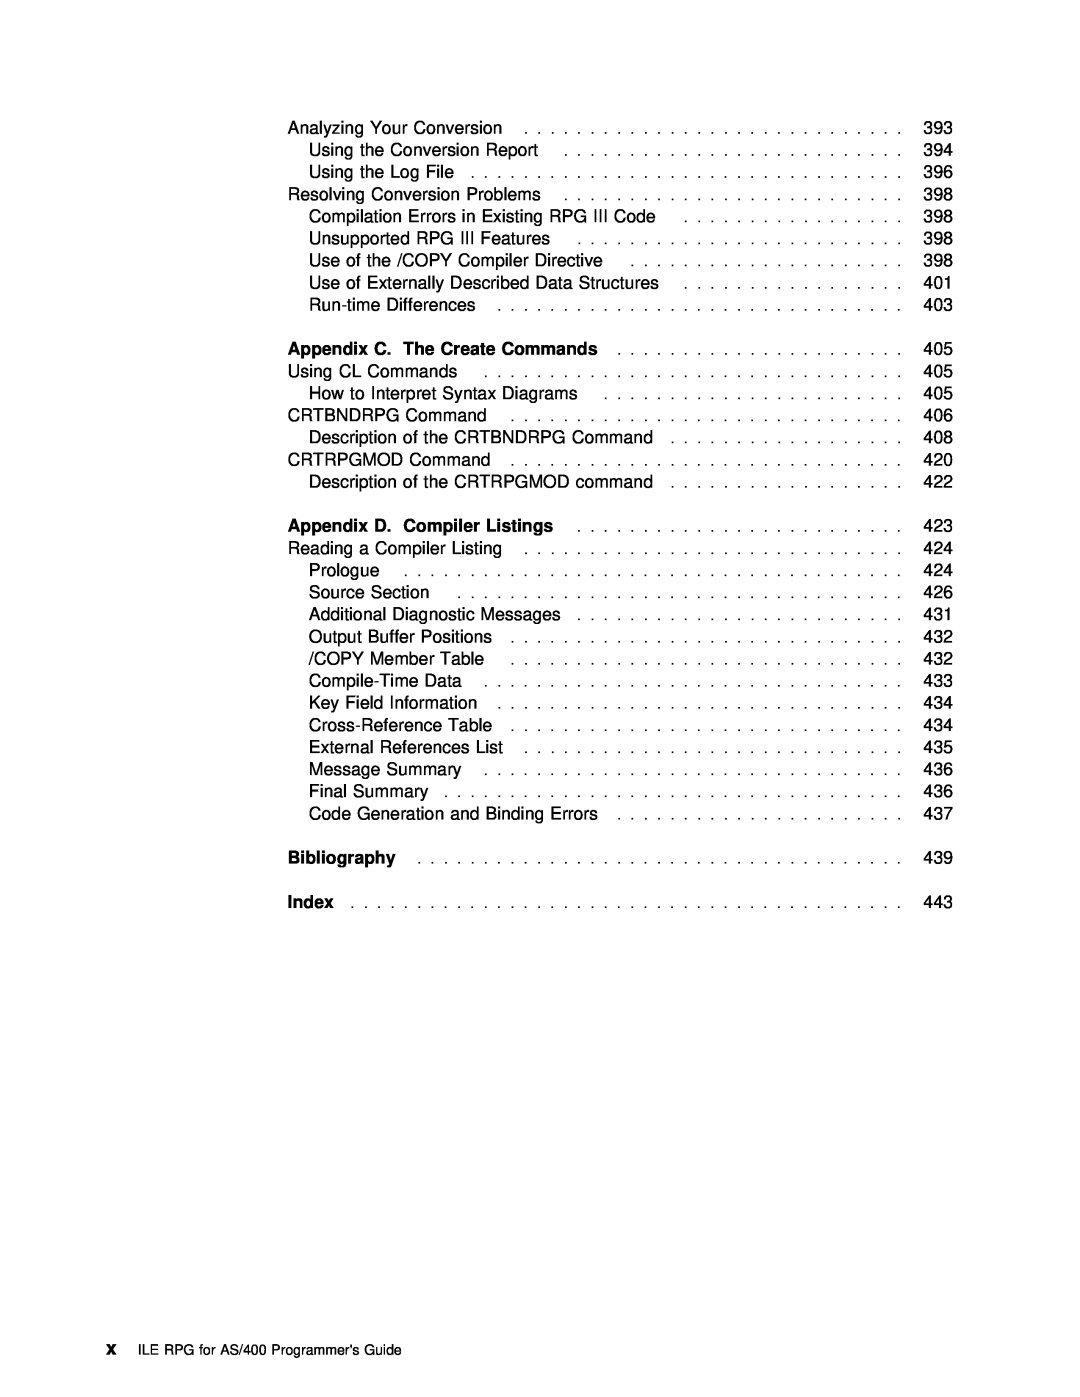 IBM AS/400 manual Index, Copy 